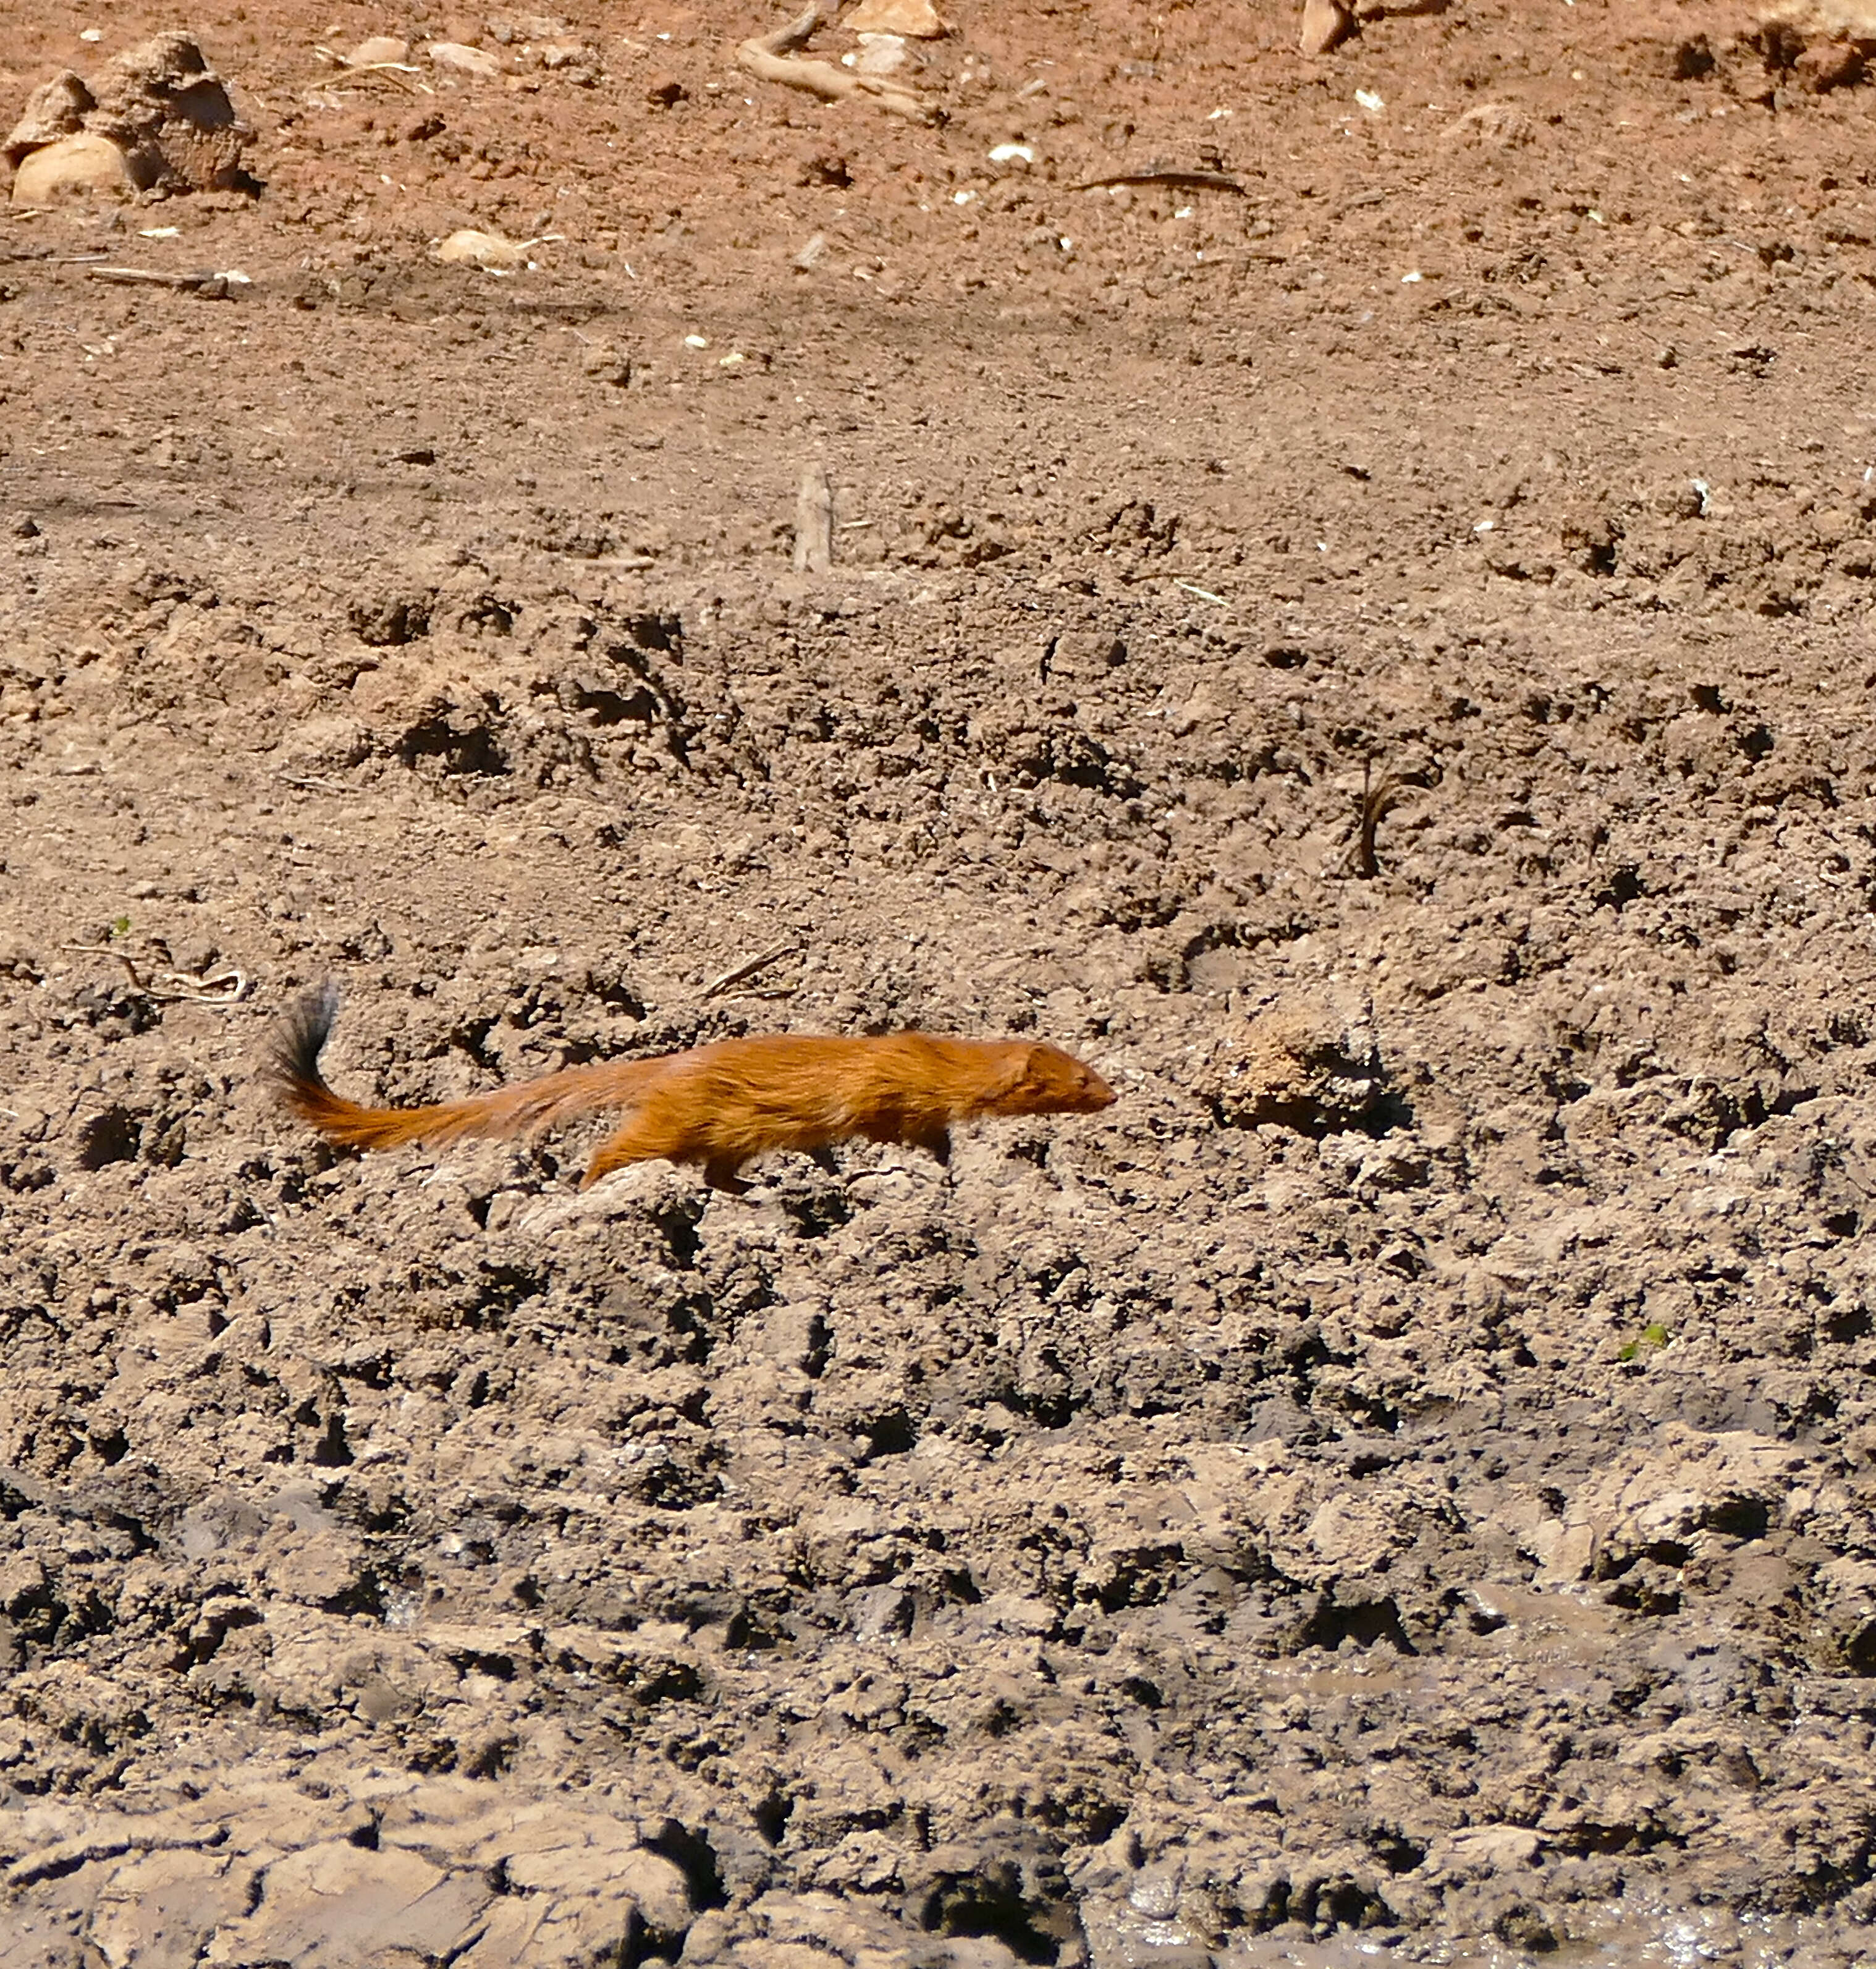 Image of Slender Mongooses